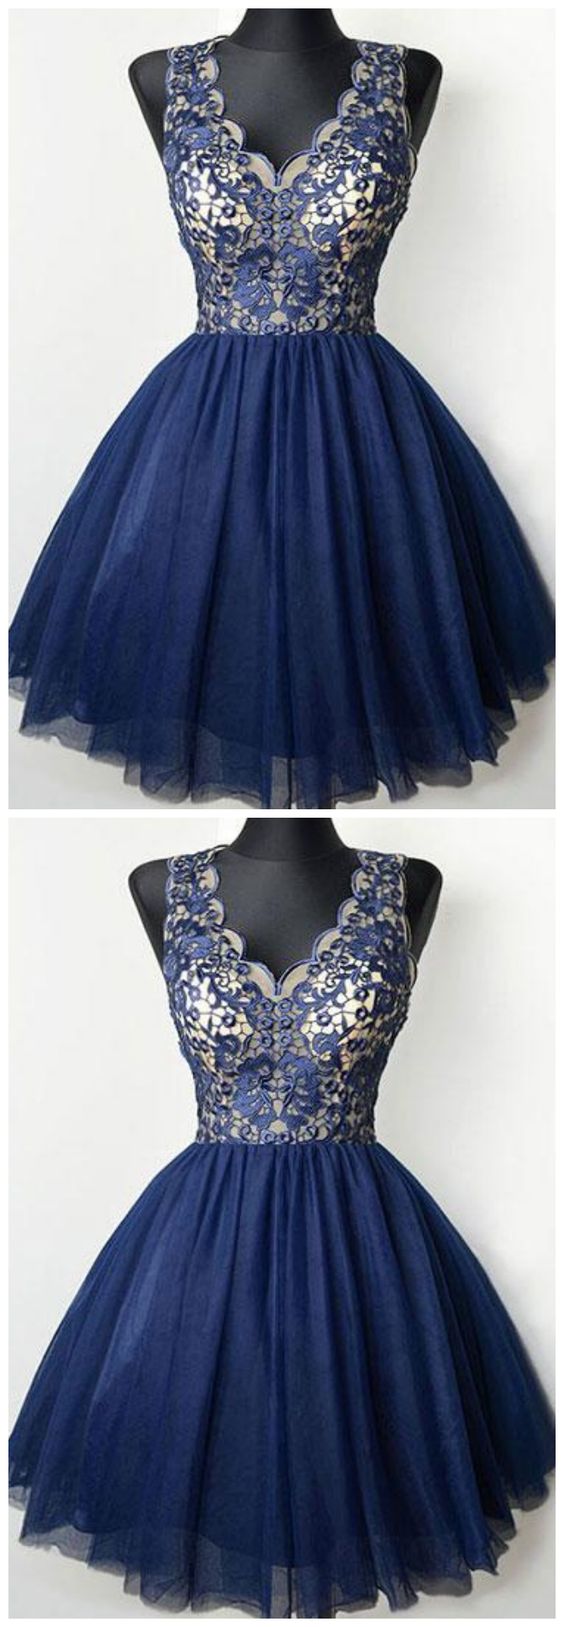 2020 Royal Blue Lace Short Prom Dress Off Shoulder Cocktail Party Gowns ...